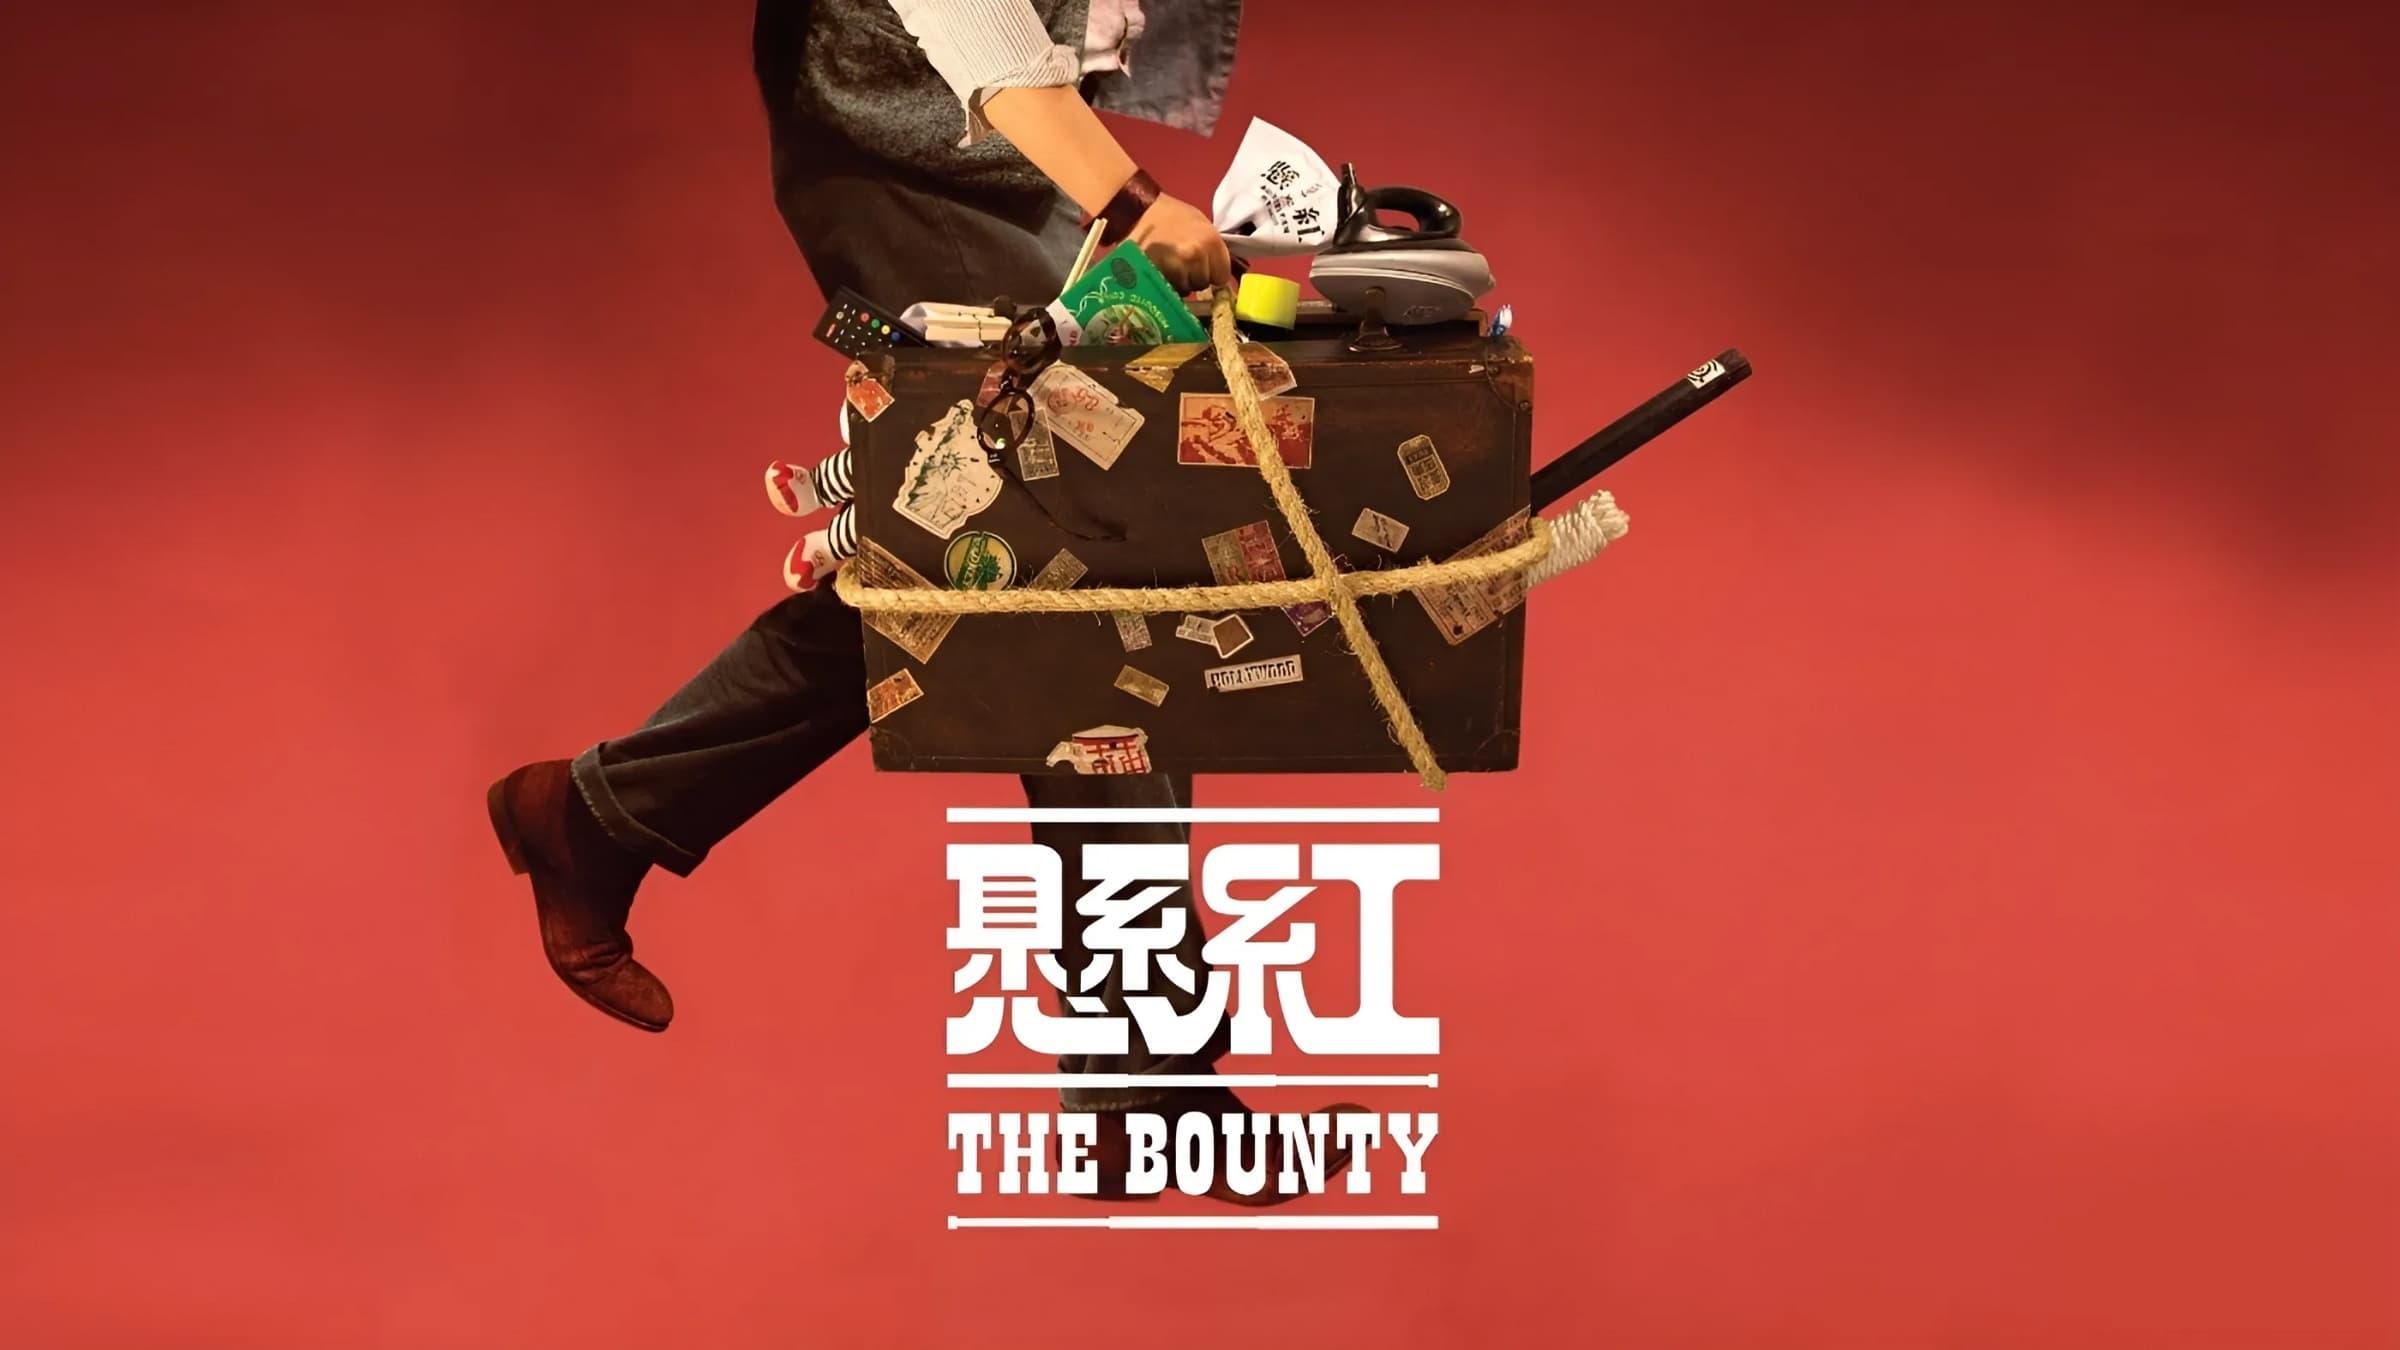 The Bounty backdrop